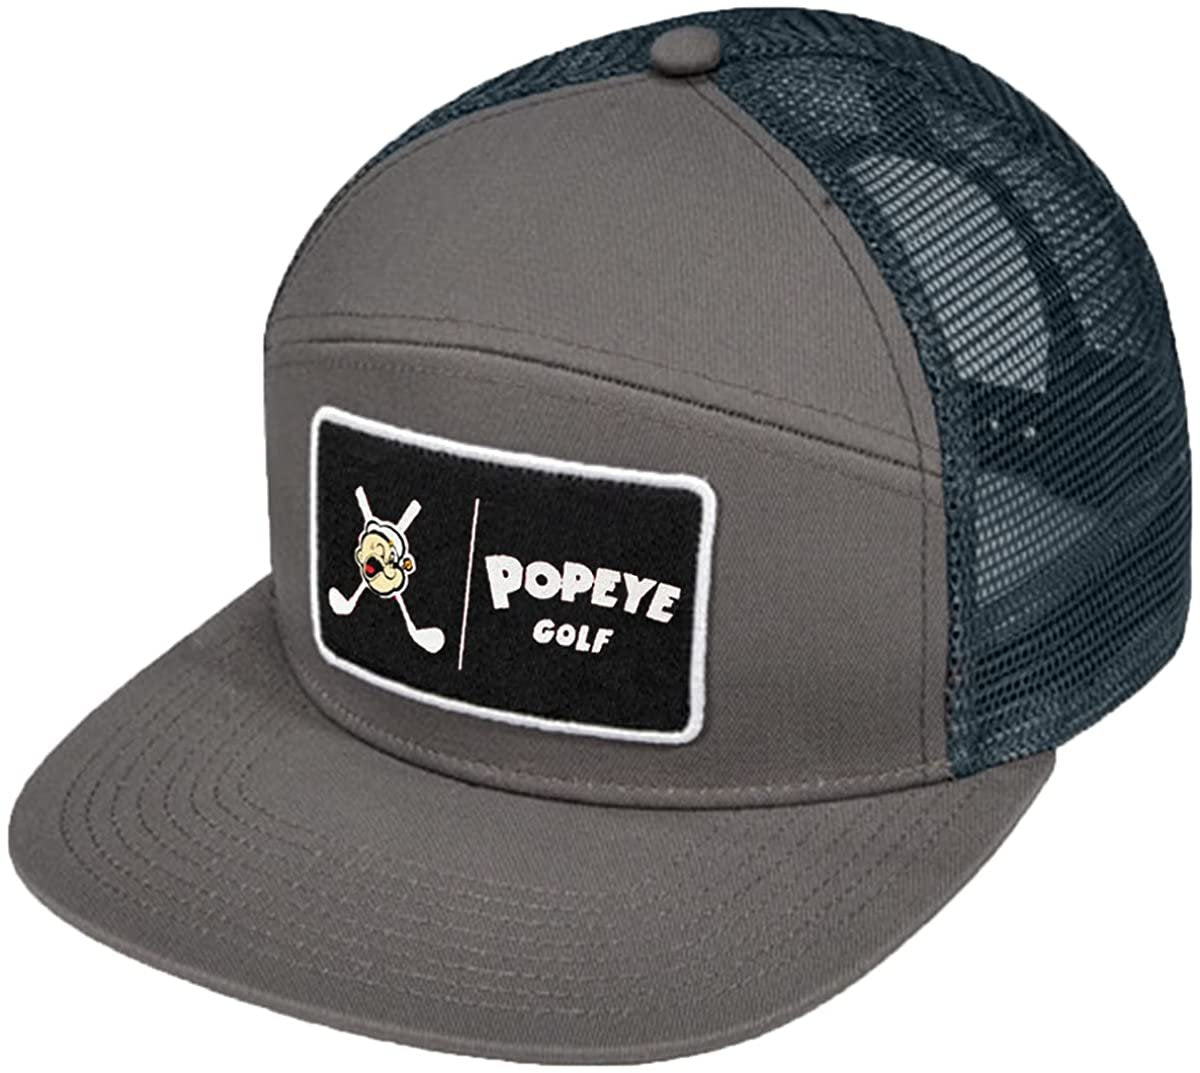 Popeye Golf Tradesman Mesh Adjustable Hat Trucker Snapback